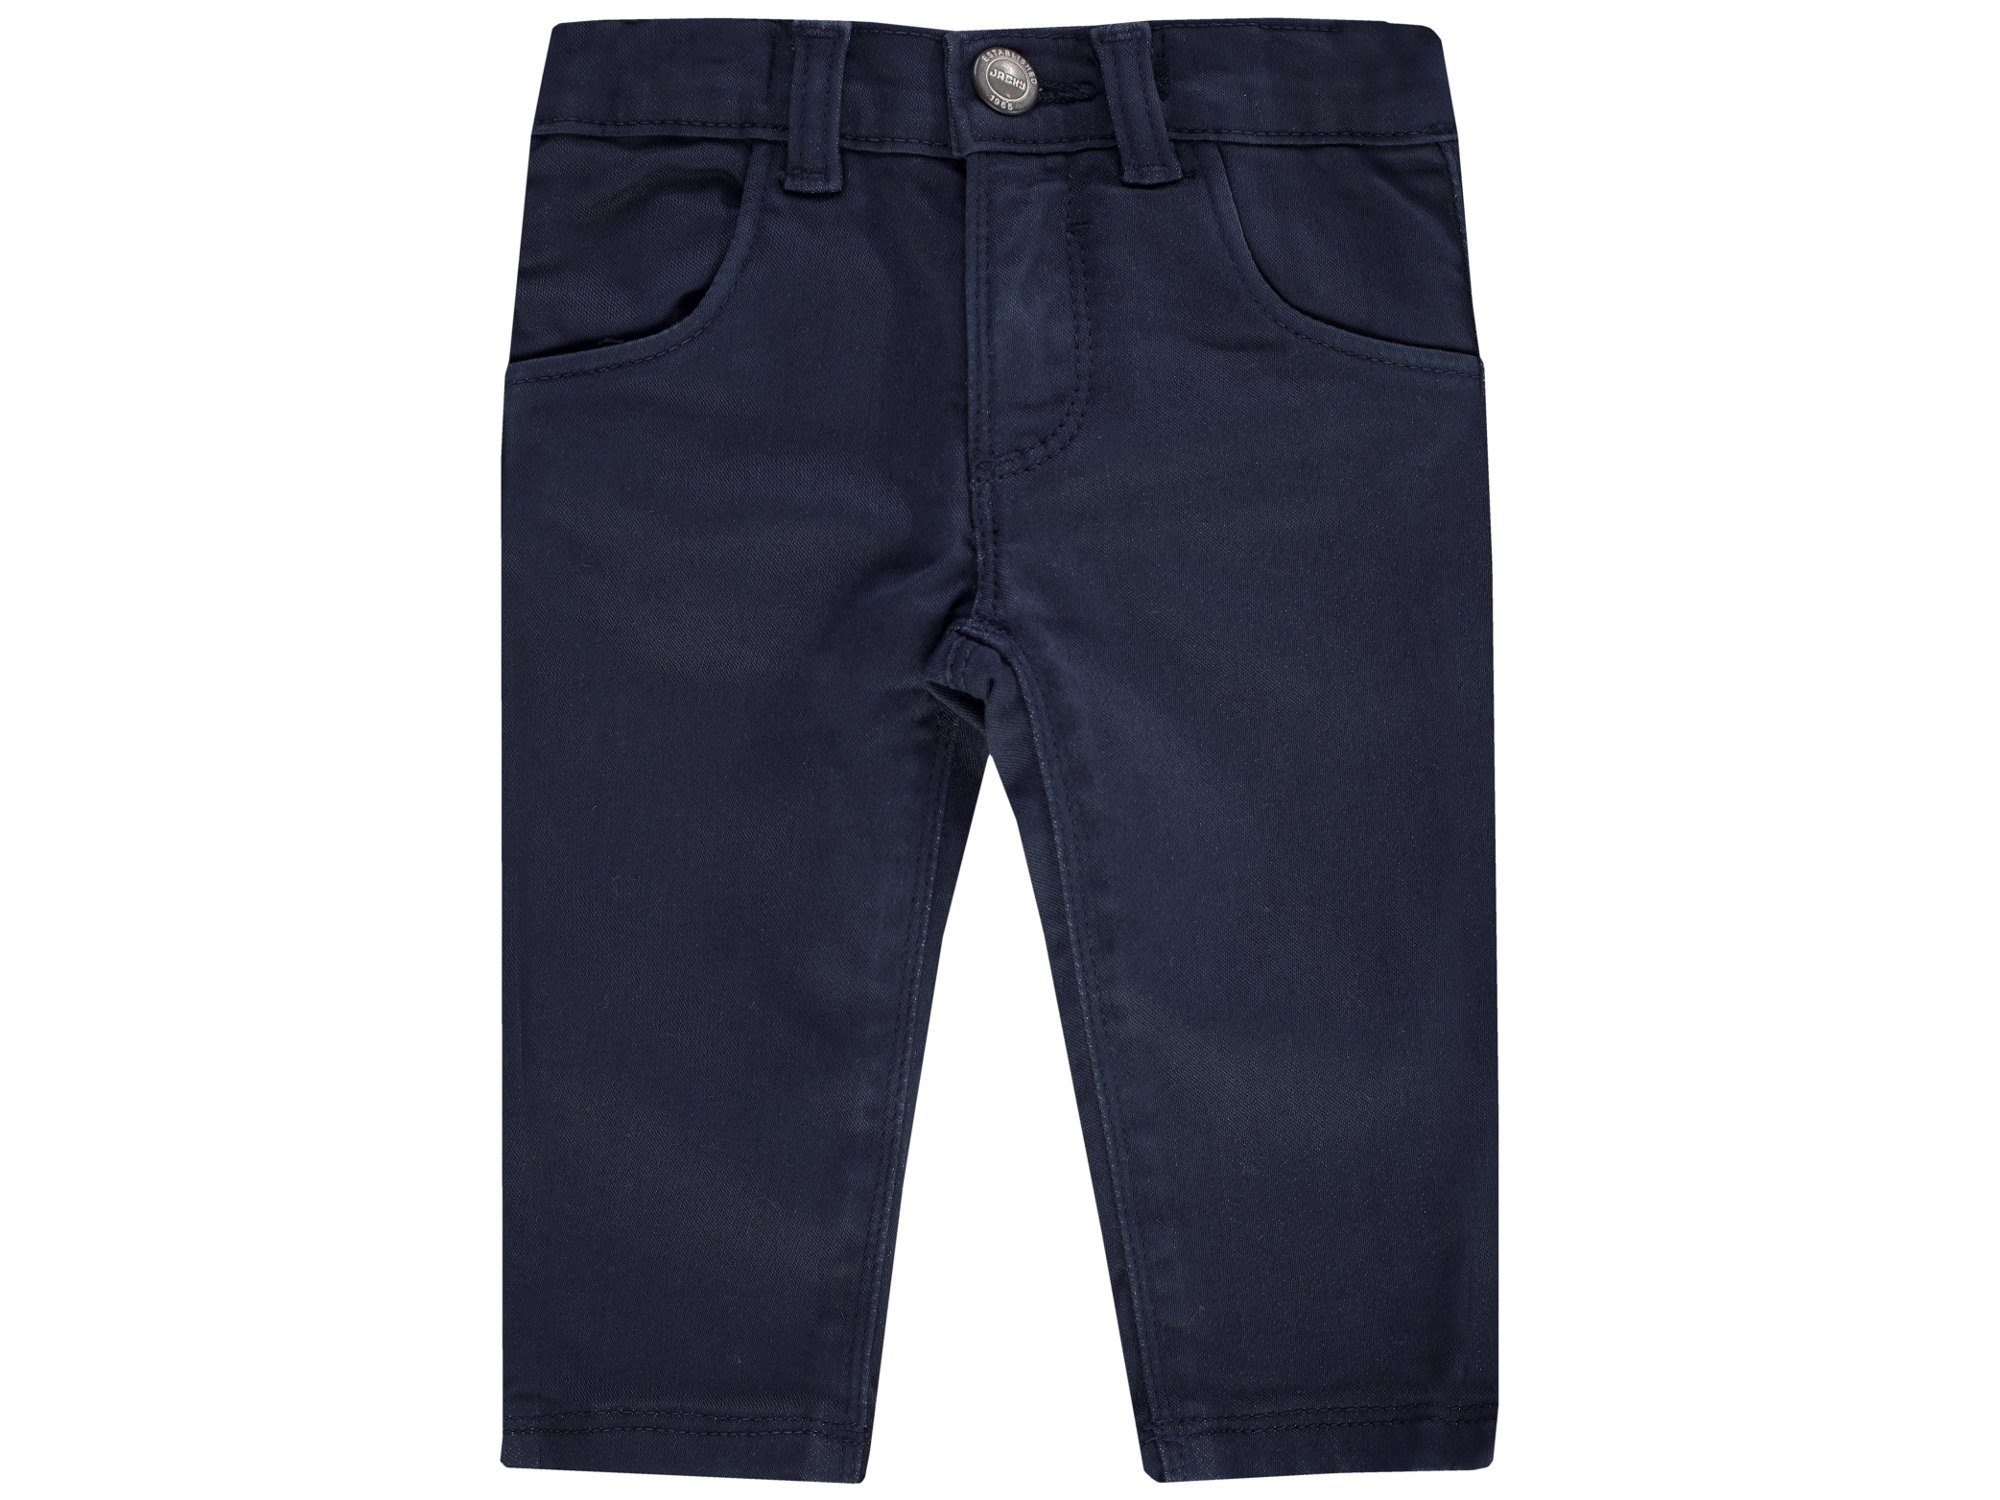 Jacky JACKY Bequeme Jeanshose BOYS Jeans (3721510) CLASSIC